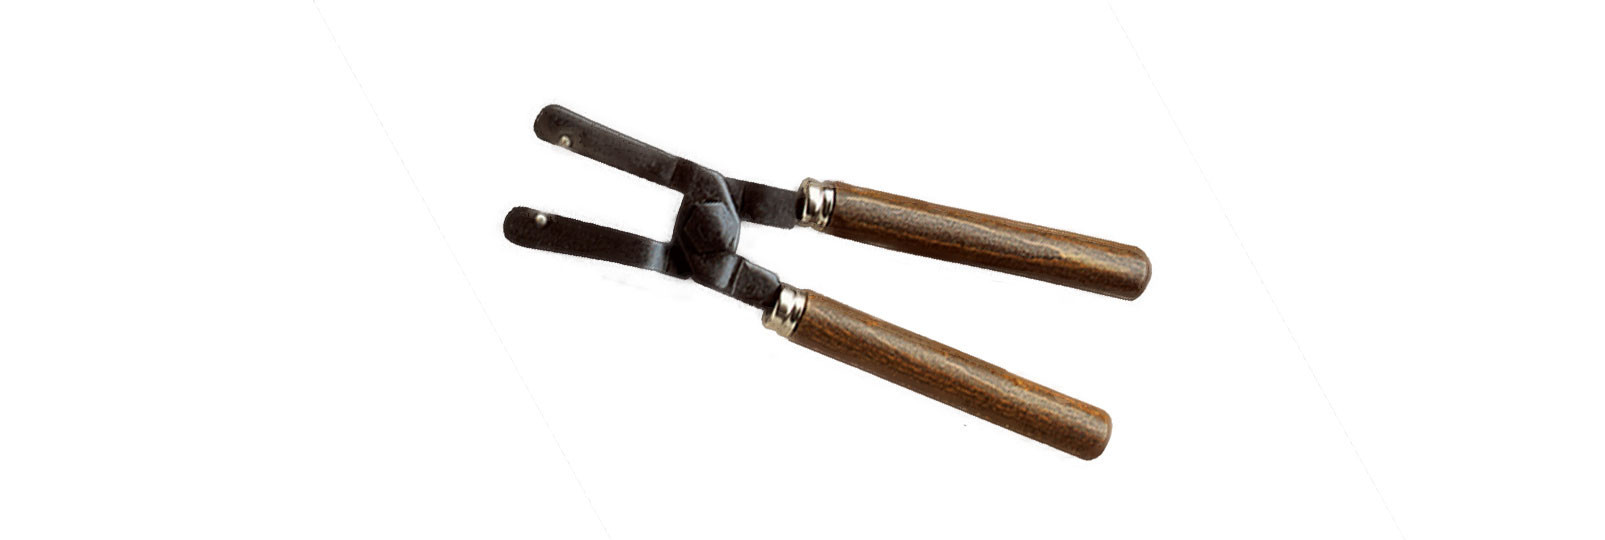 Wooden handles for bullet moulds steel block